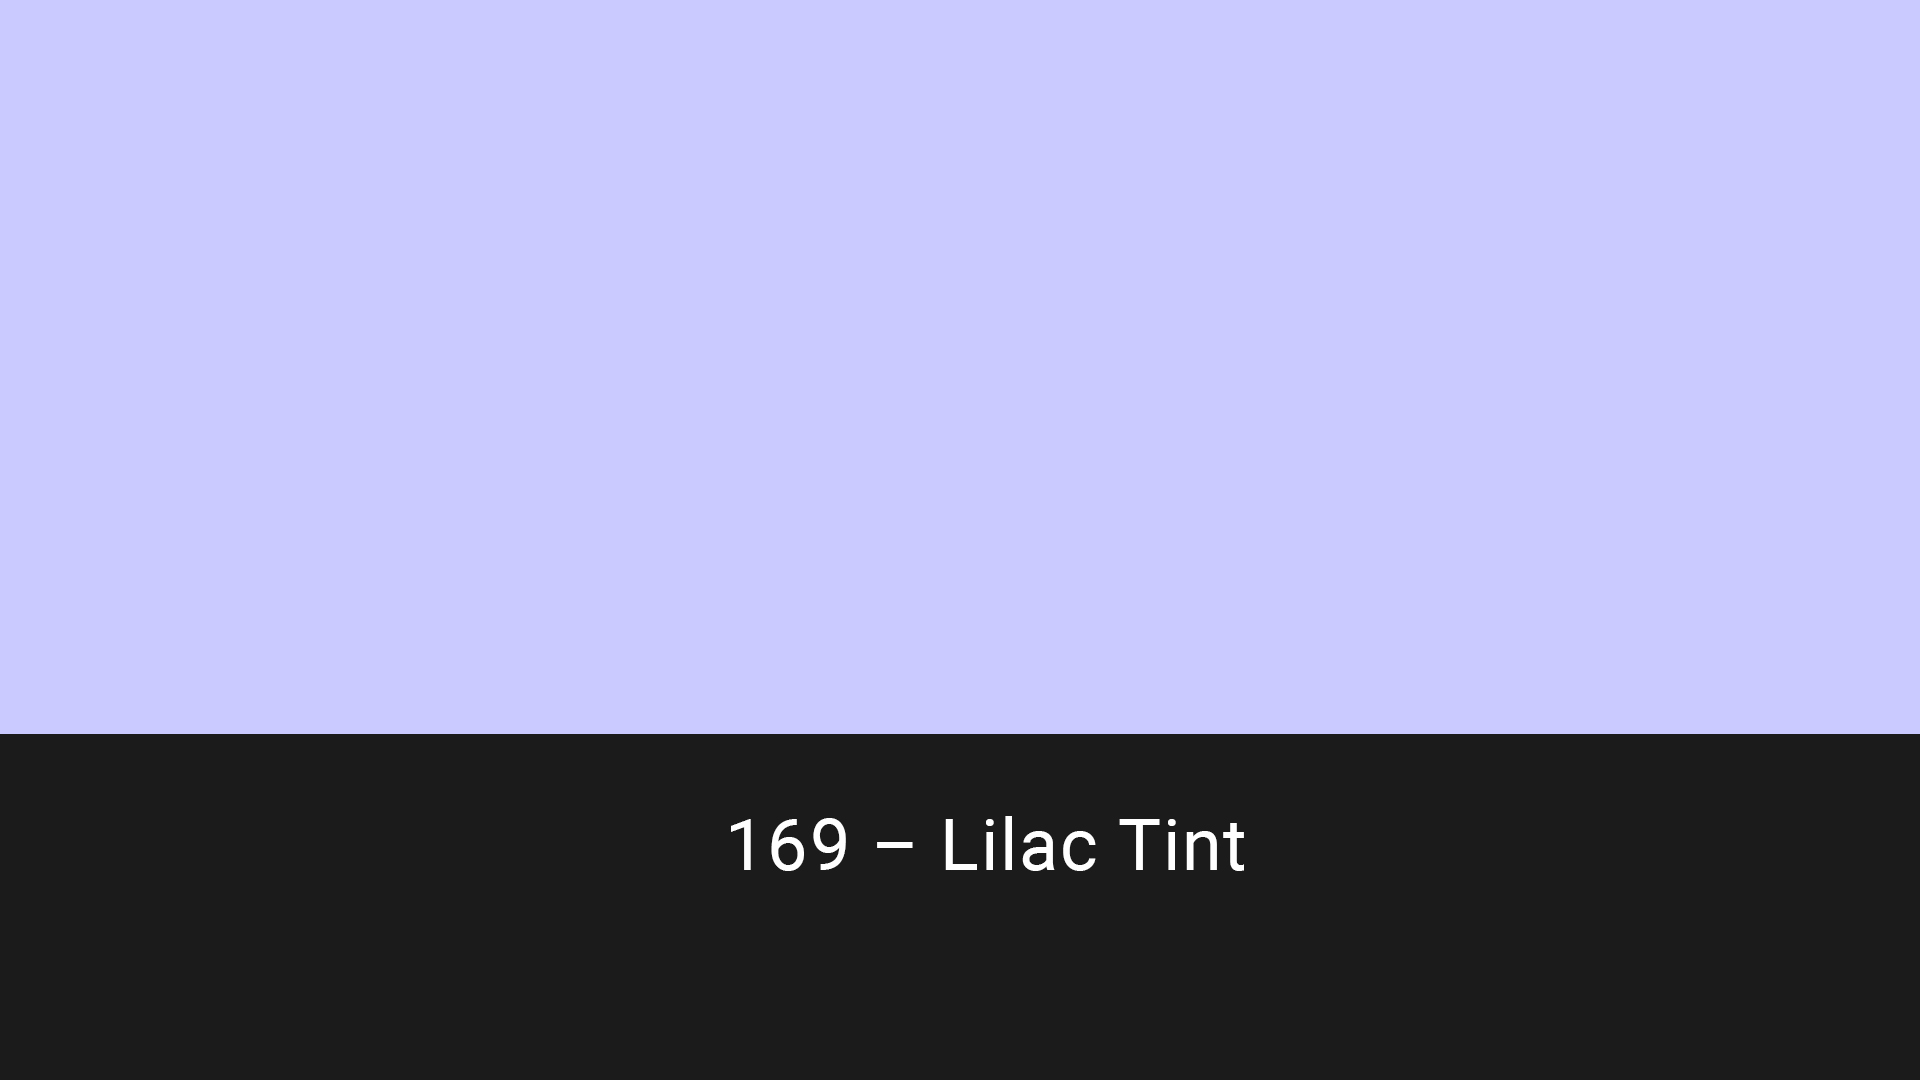 Cotech filters 169 Liliac Tint